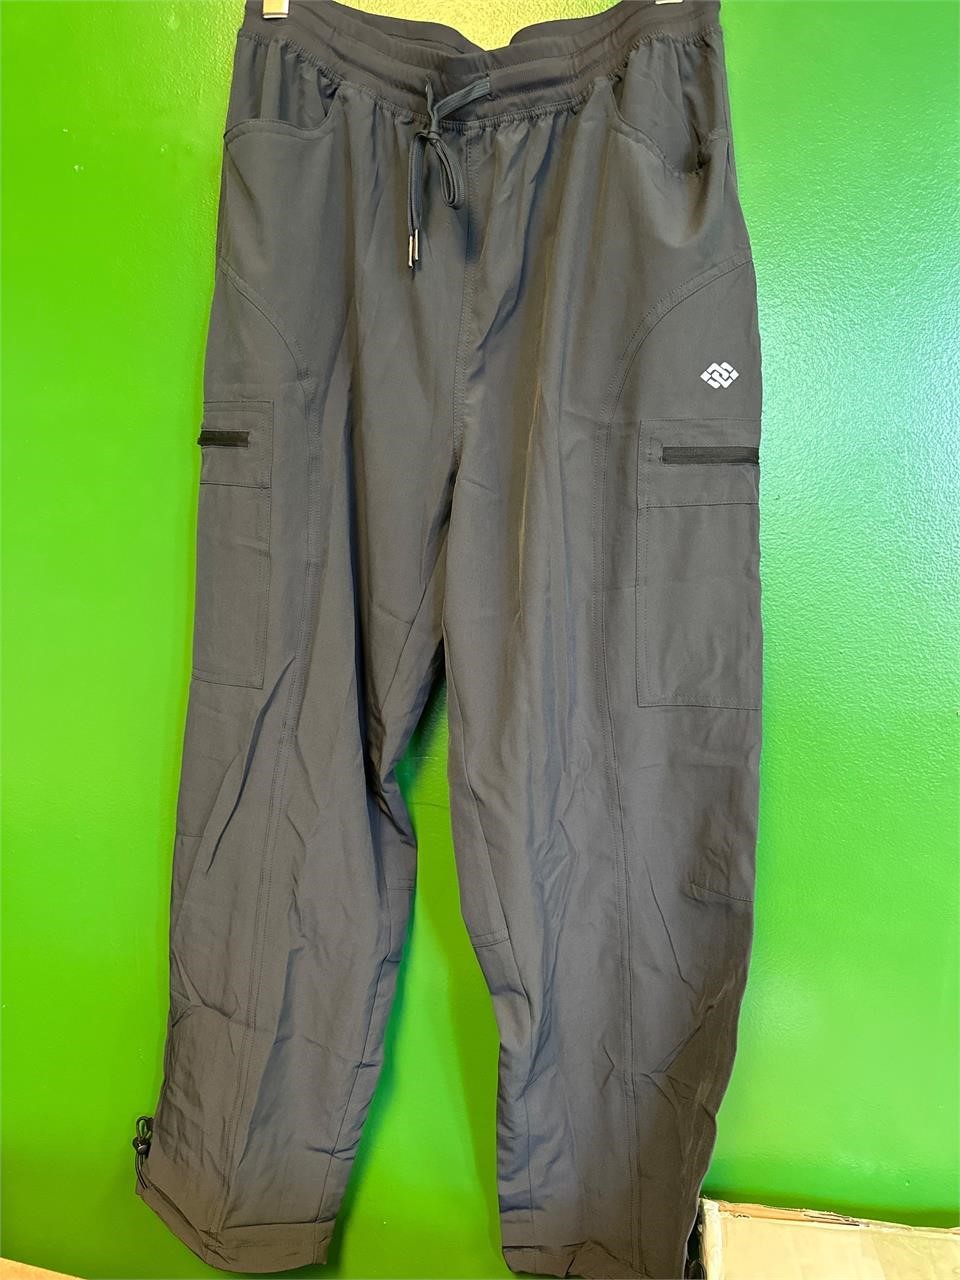 ($34) MoFiz Womens Hiking Pants Zipper,L